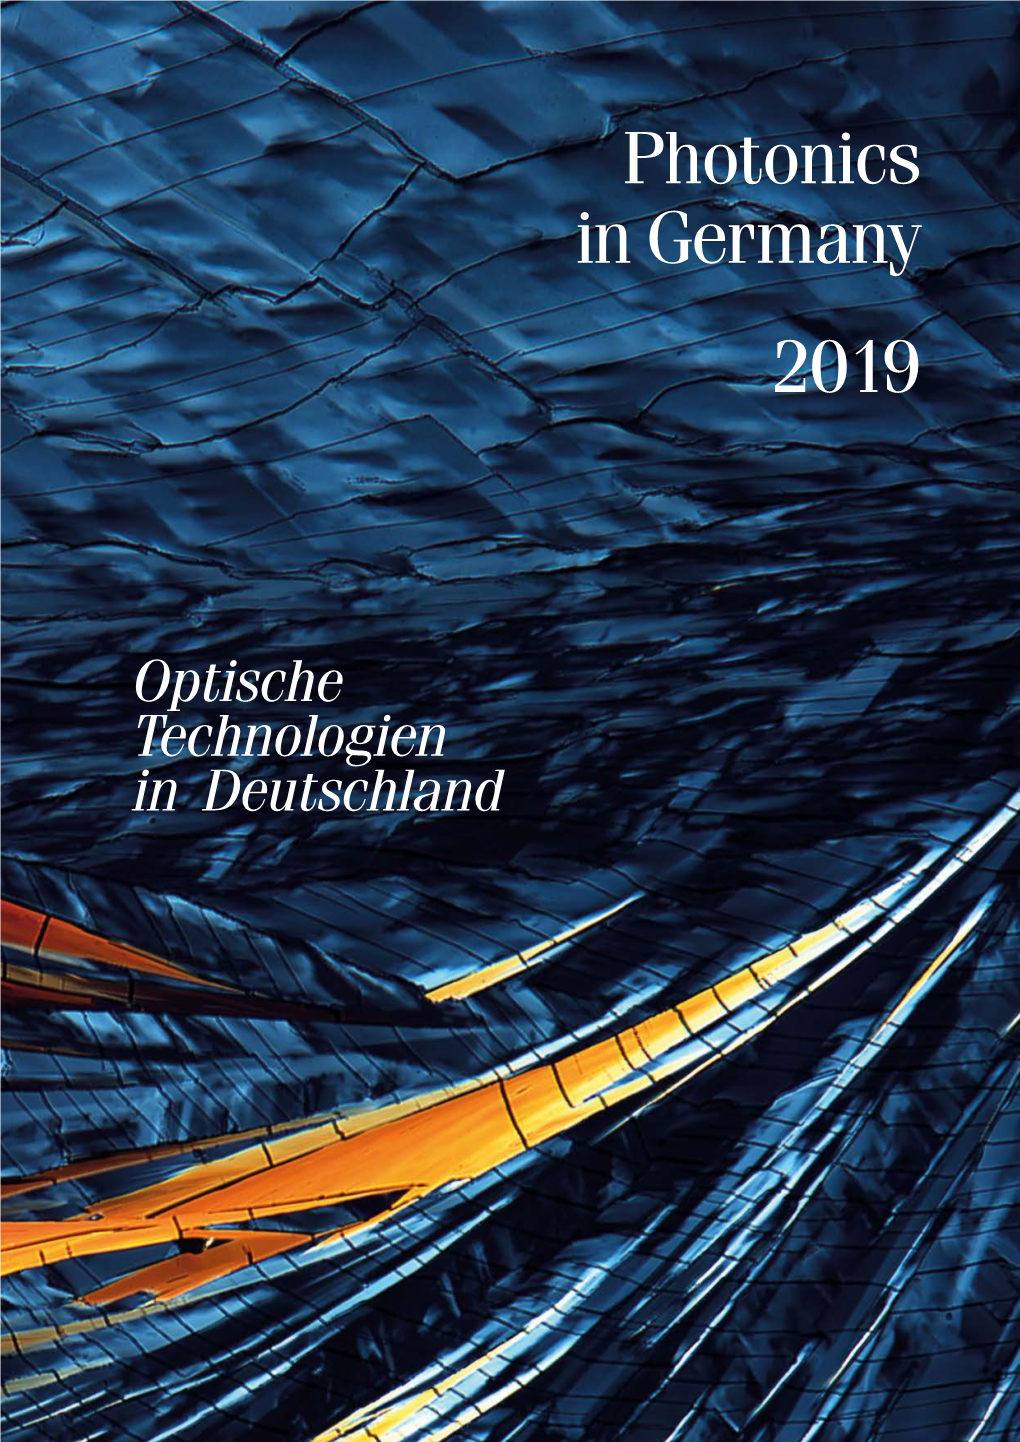 Photonics in Germany 2019